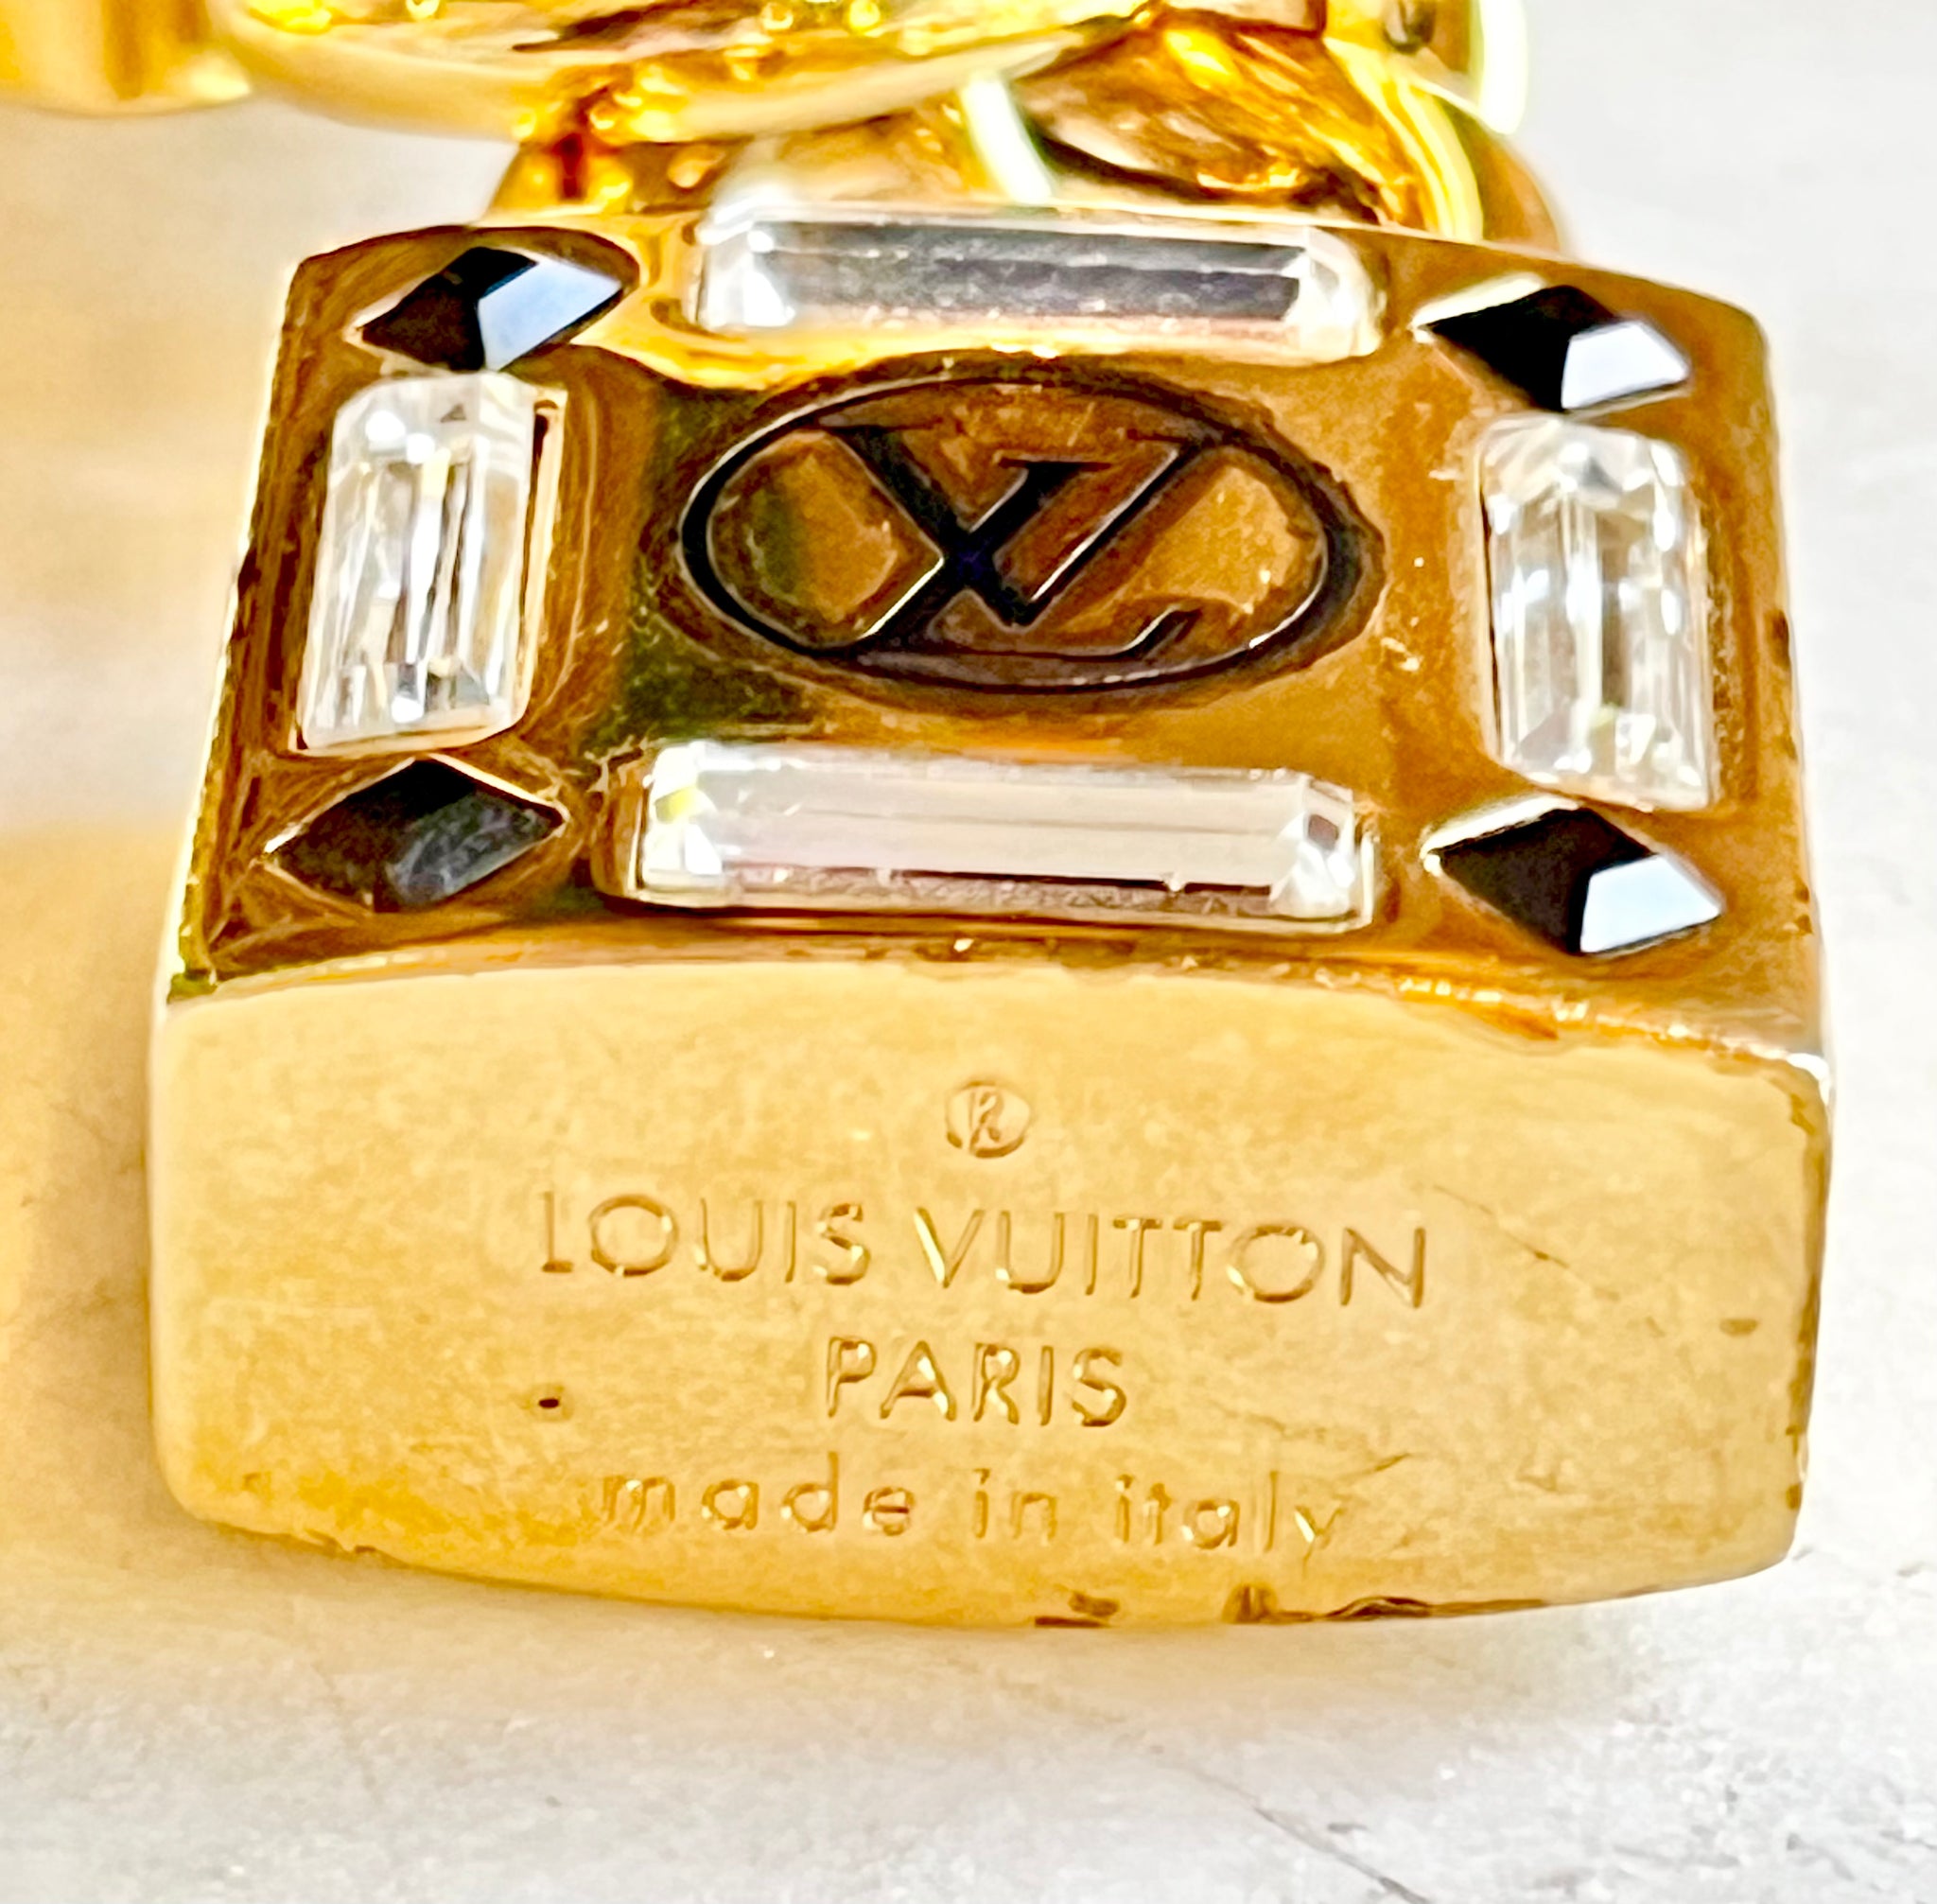 Real or fake? - LV padlock and key : r/Louisvuitton